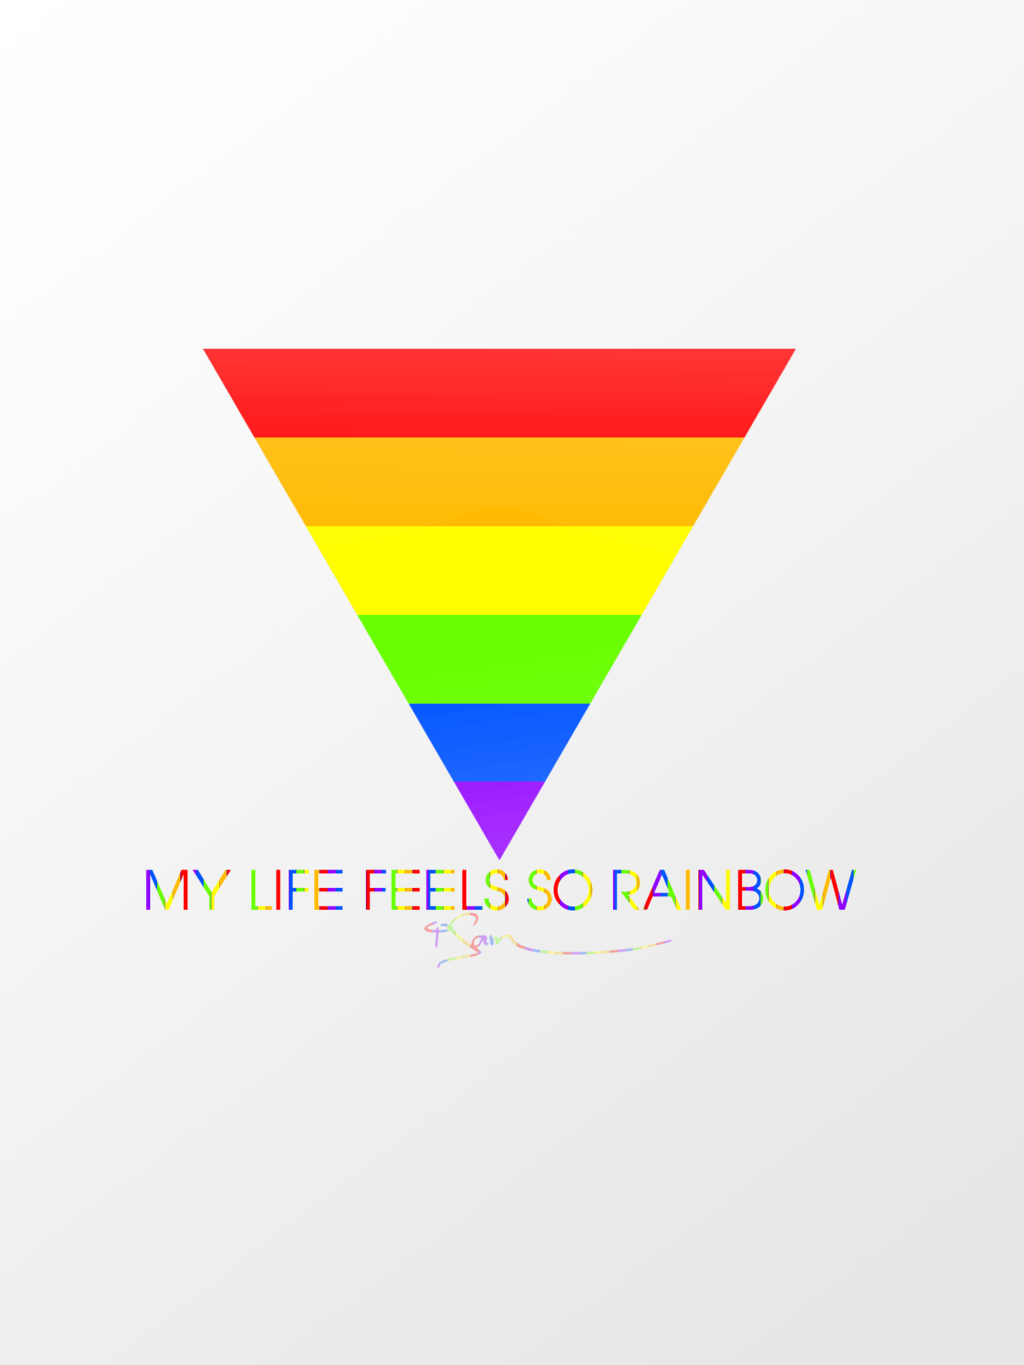 My life feels so rainbow - LGBT, gay